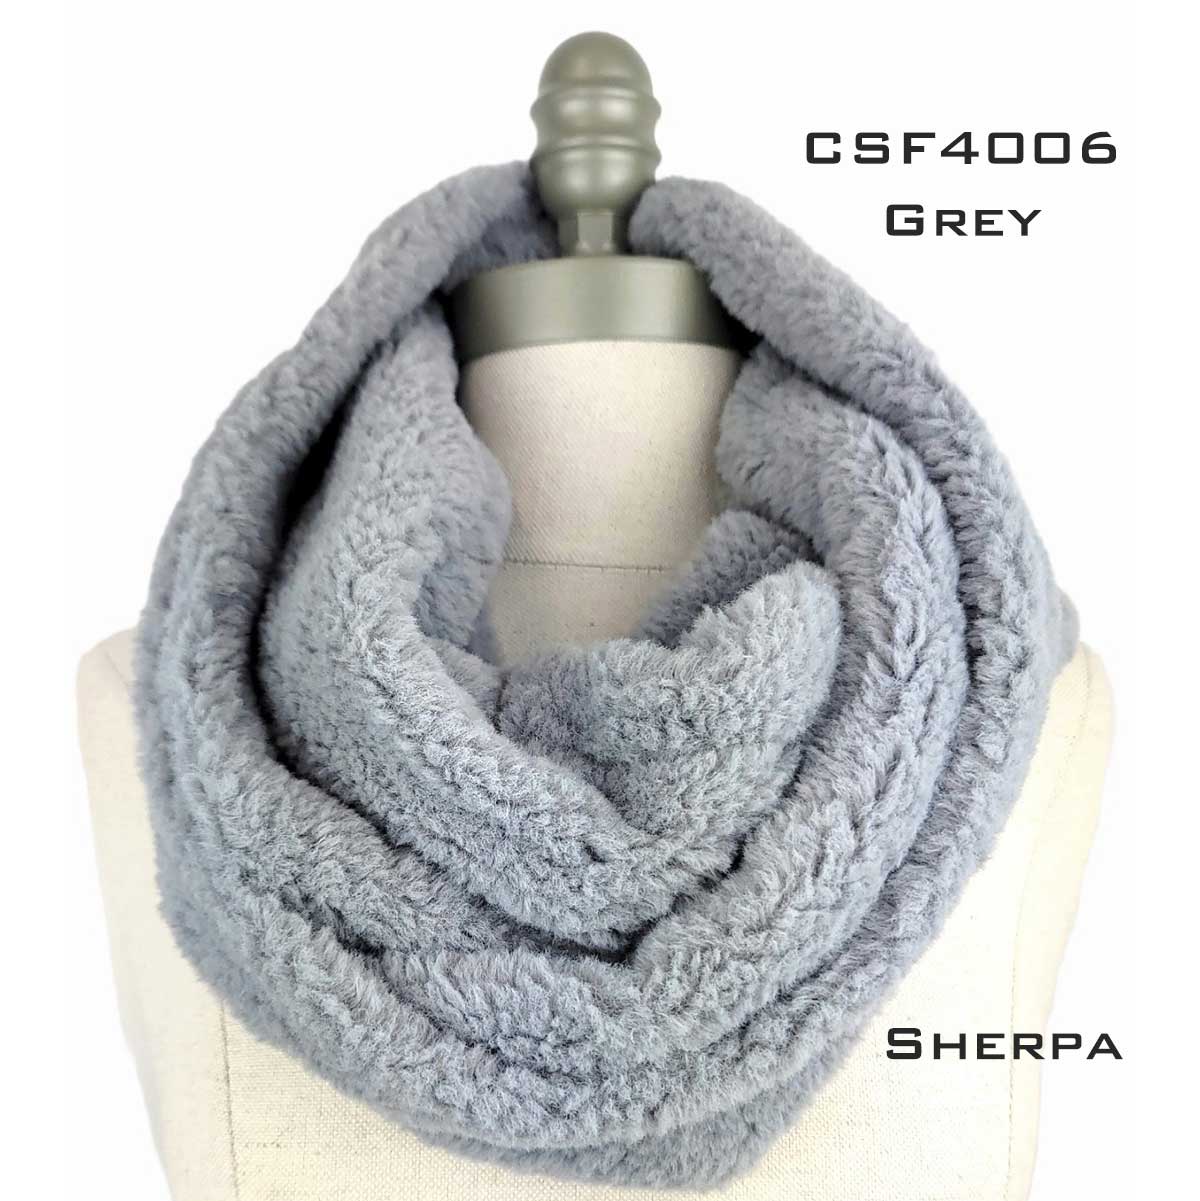 CSF4006 GREY Sherpa Fleece Infinity Scarf